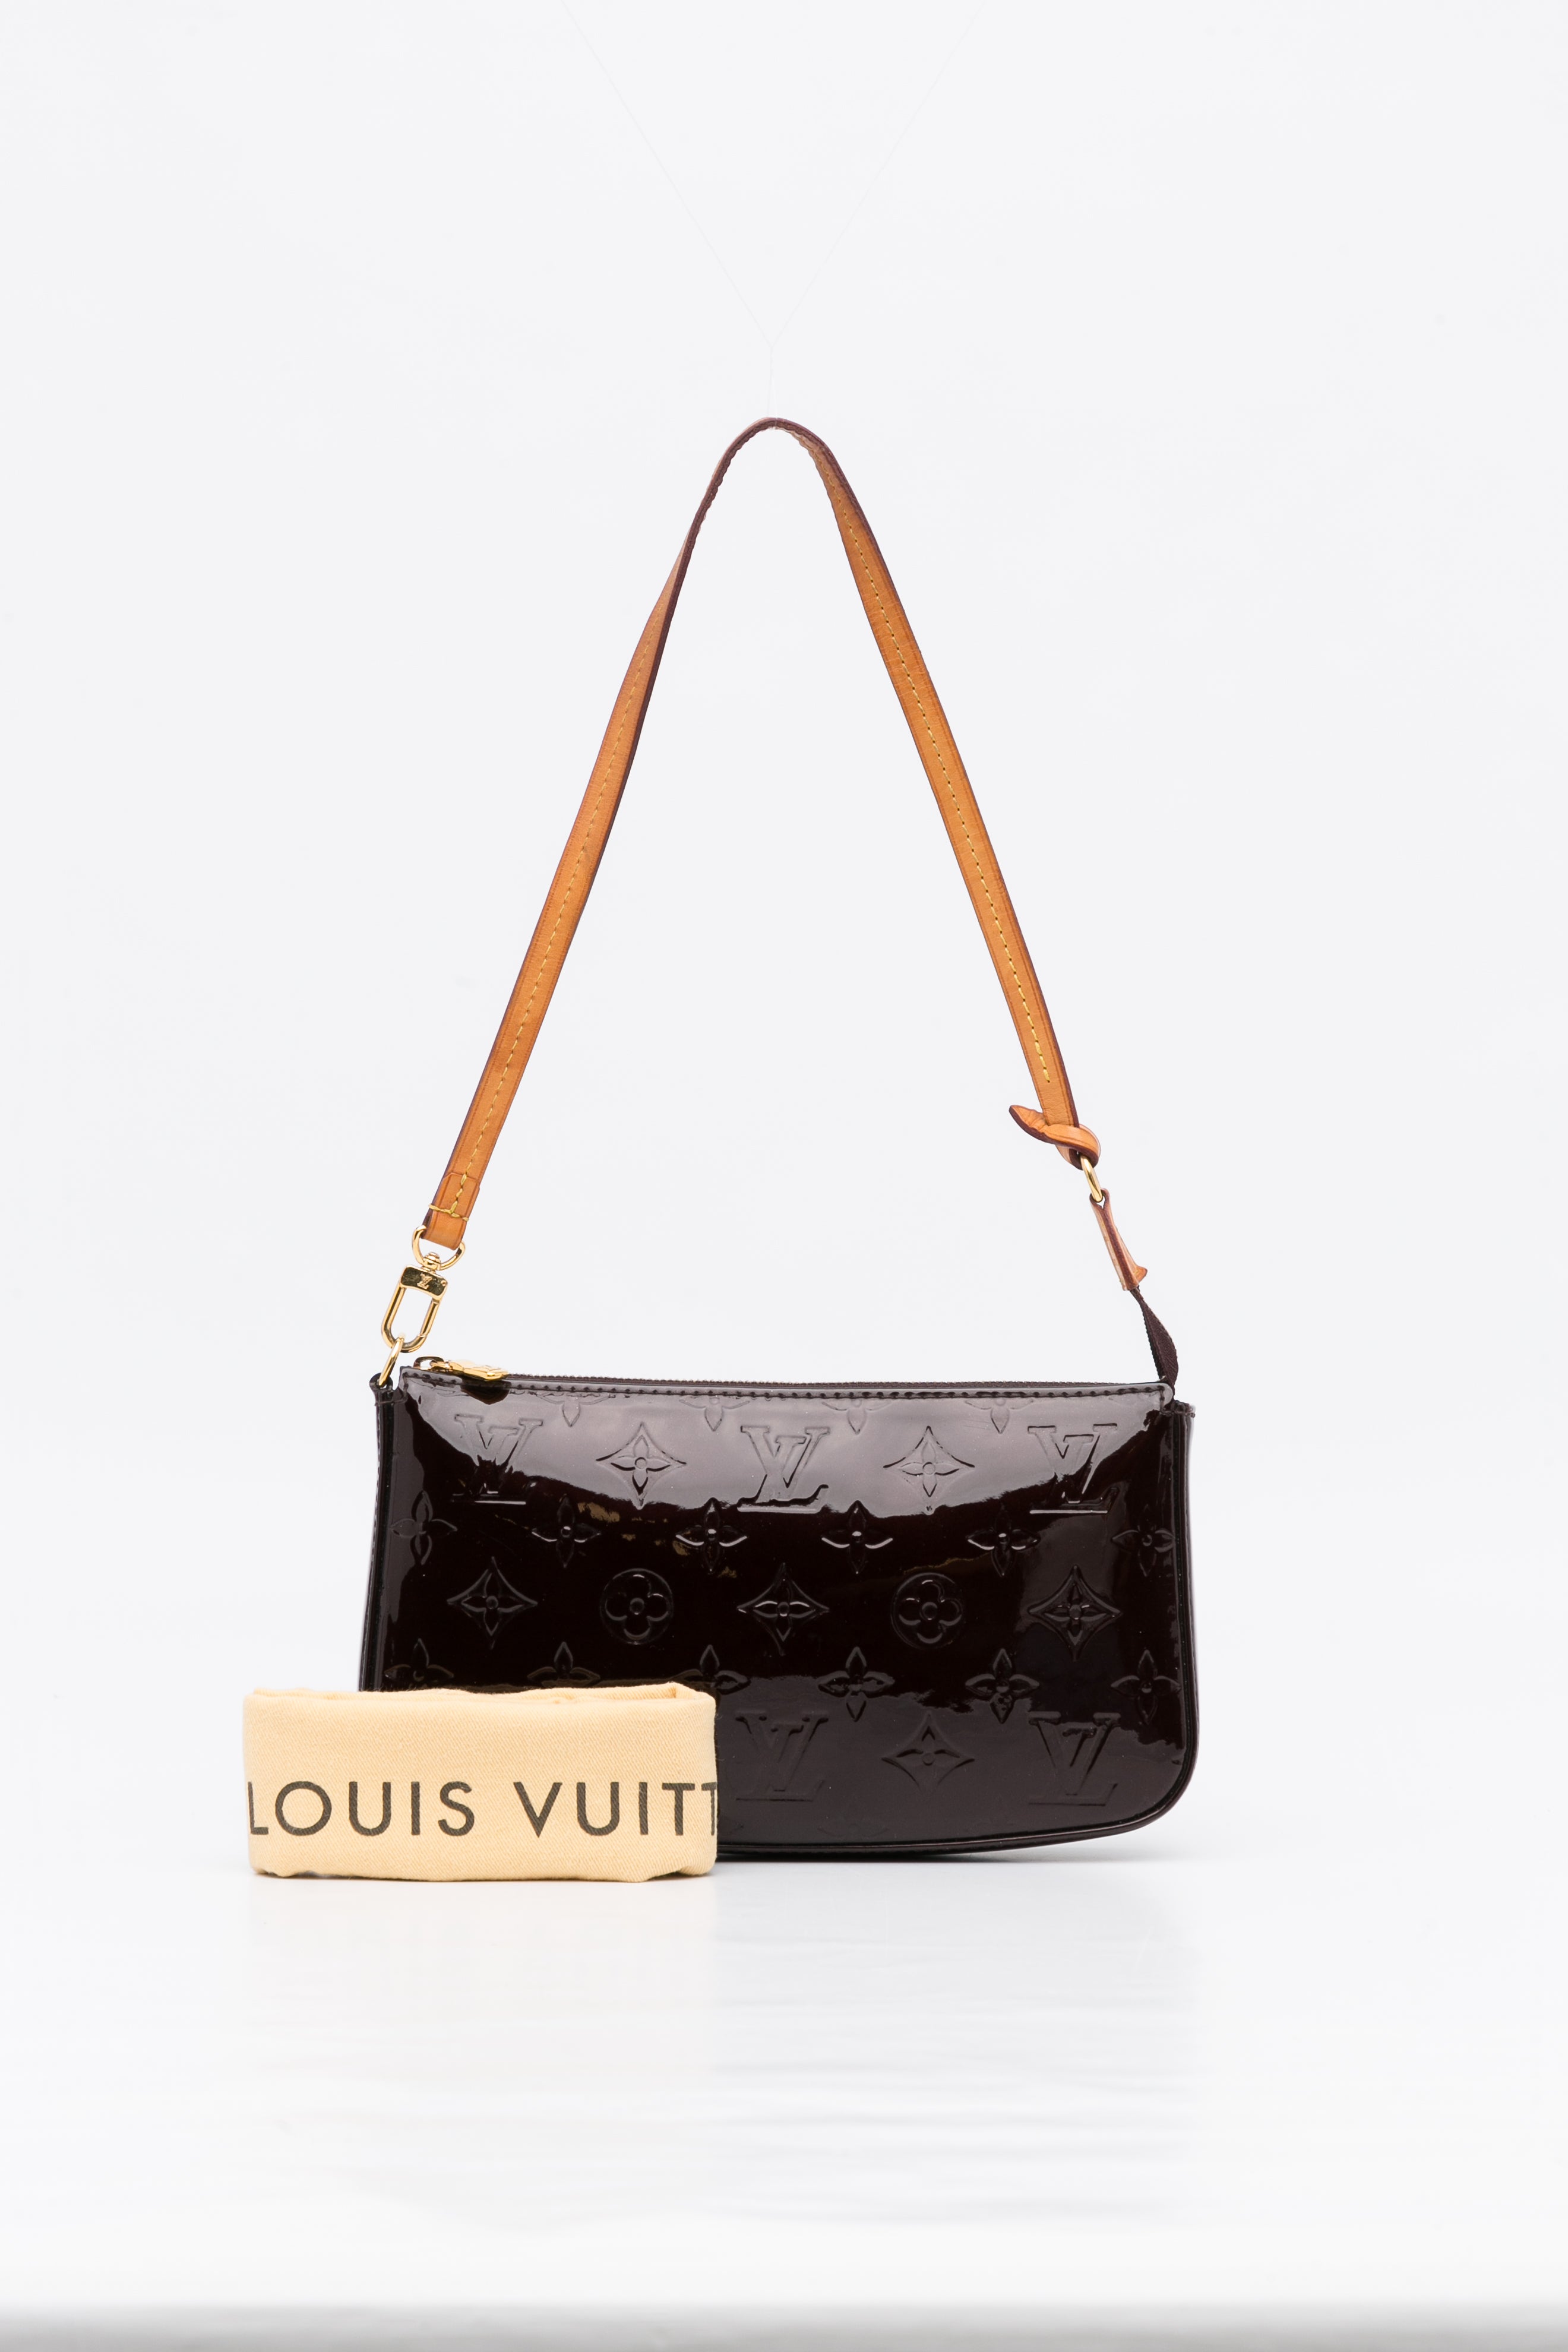 Louis Vuitton Purple Vernis Trousse Cosmetic Pouch Leather Patent